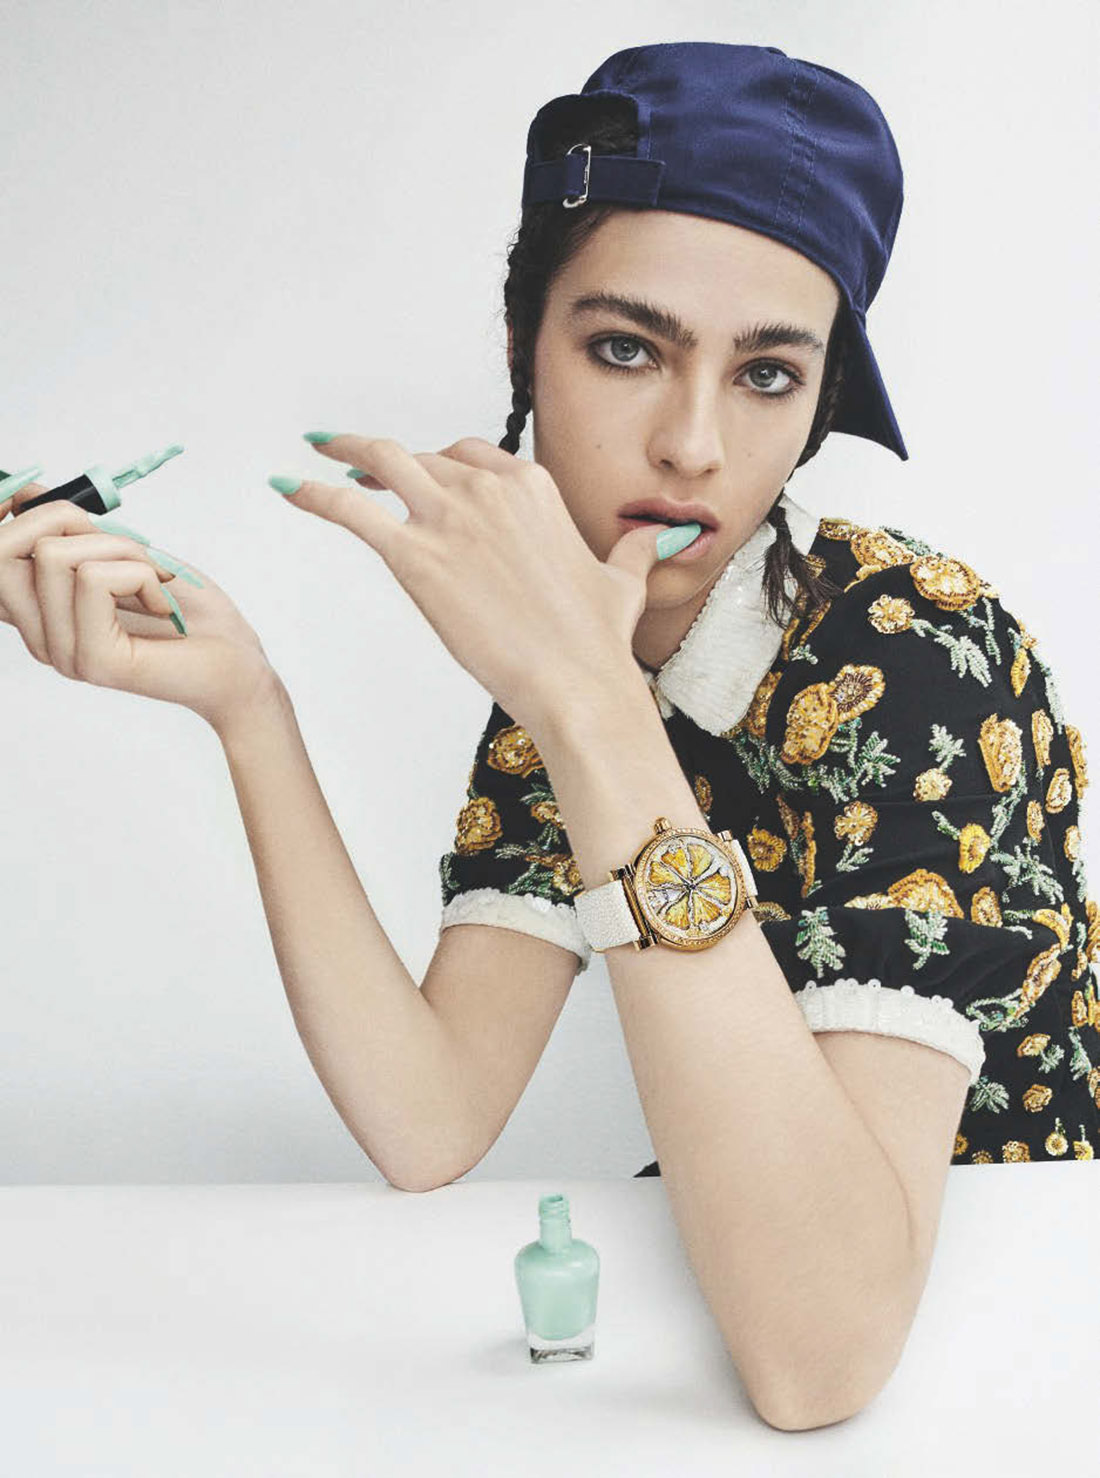 Loli Bahia by Giampaolo Sgura for Vogue Italia June 2021 - fashionotography